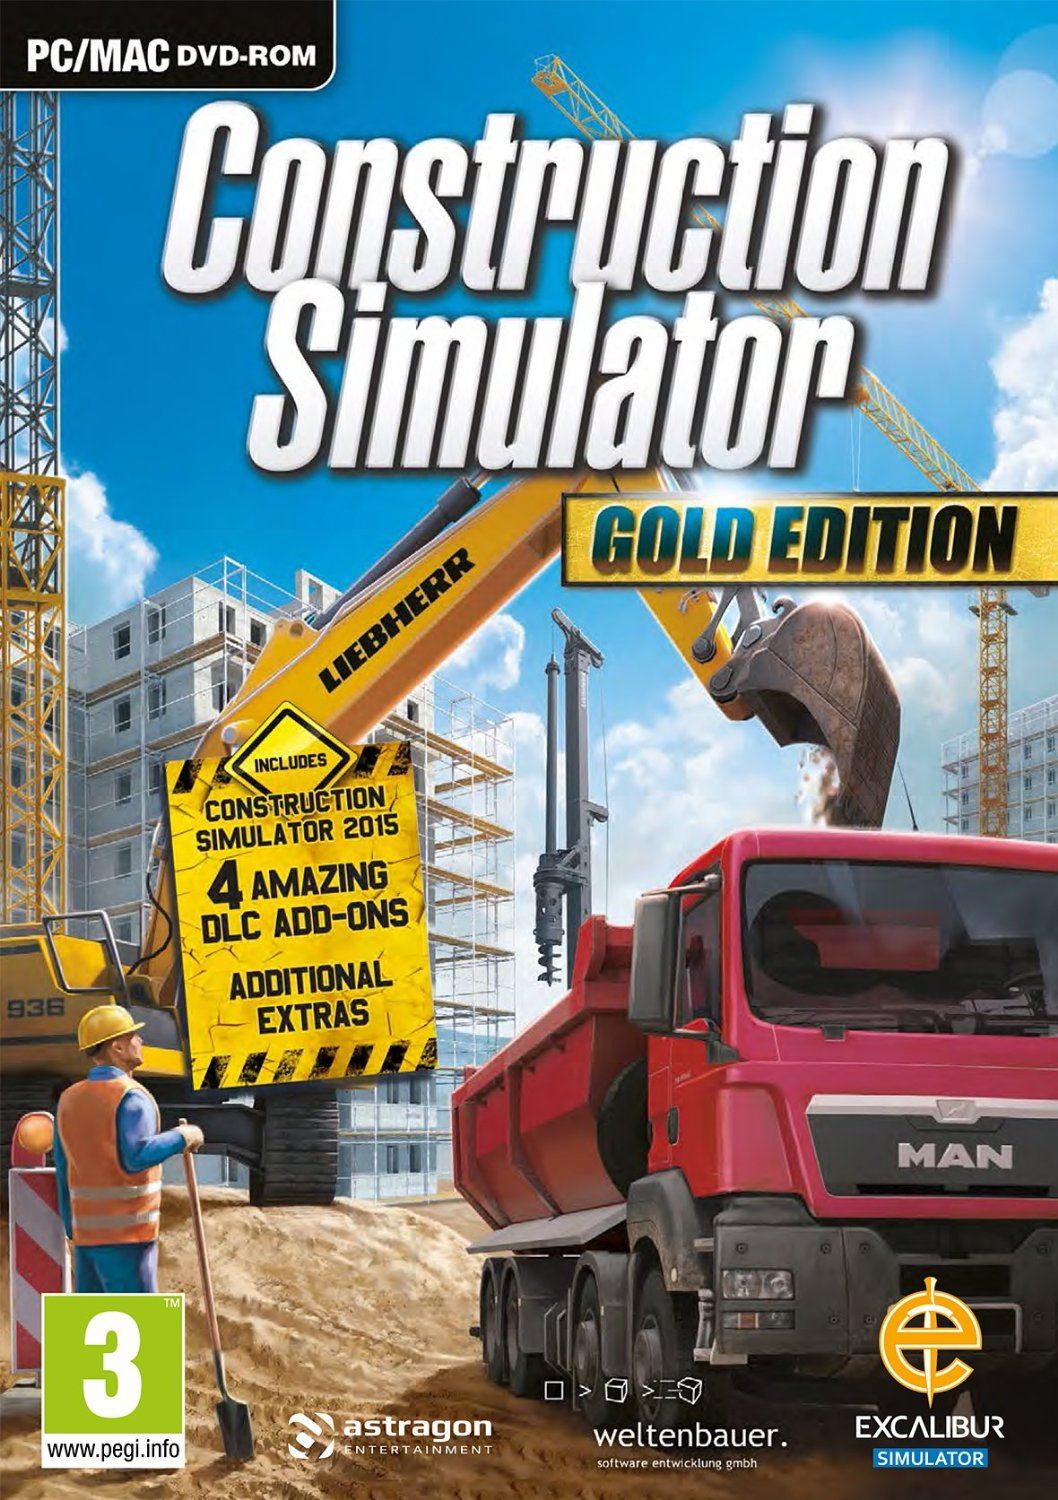 construction simulator 2012 game